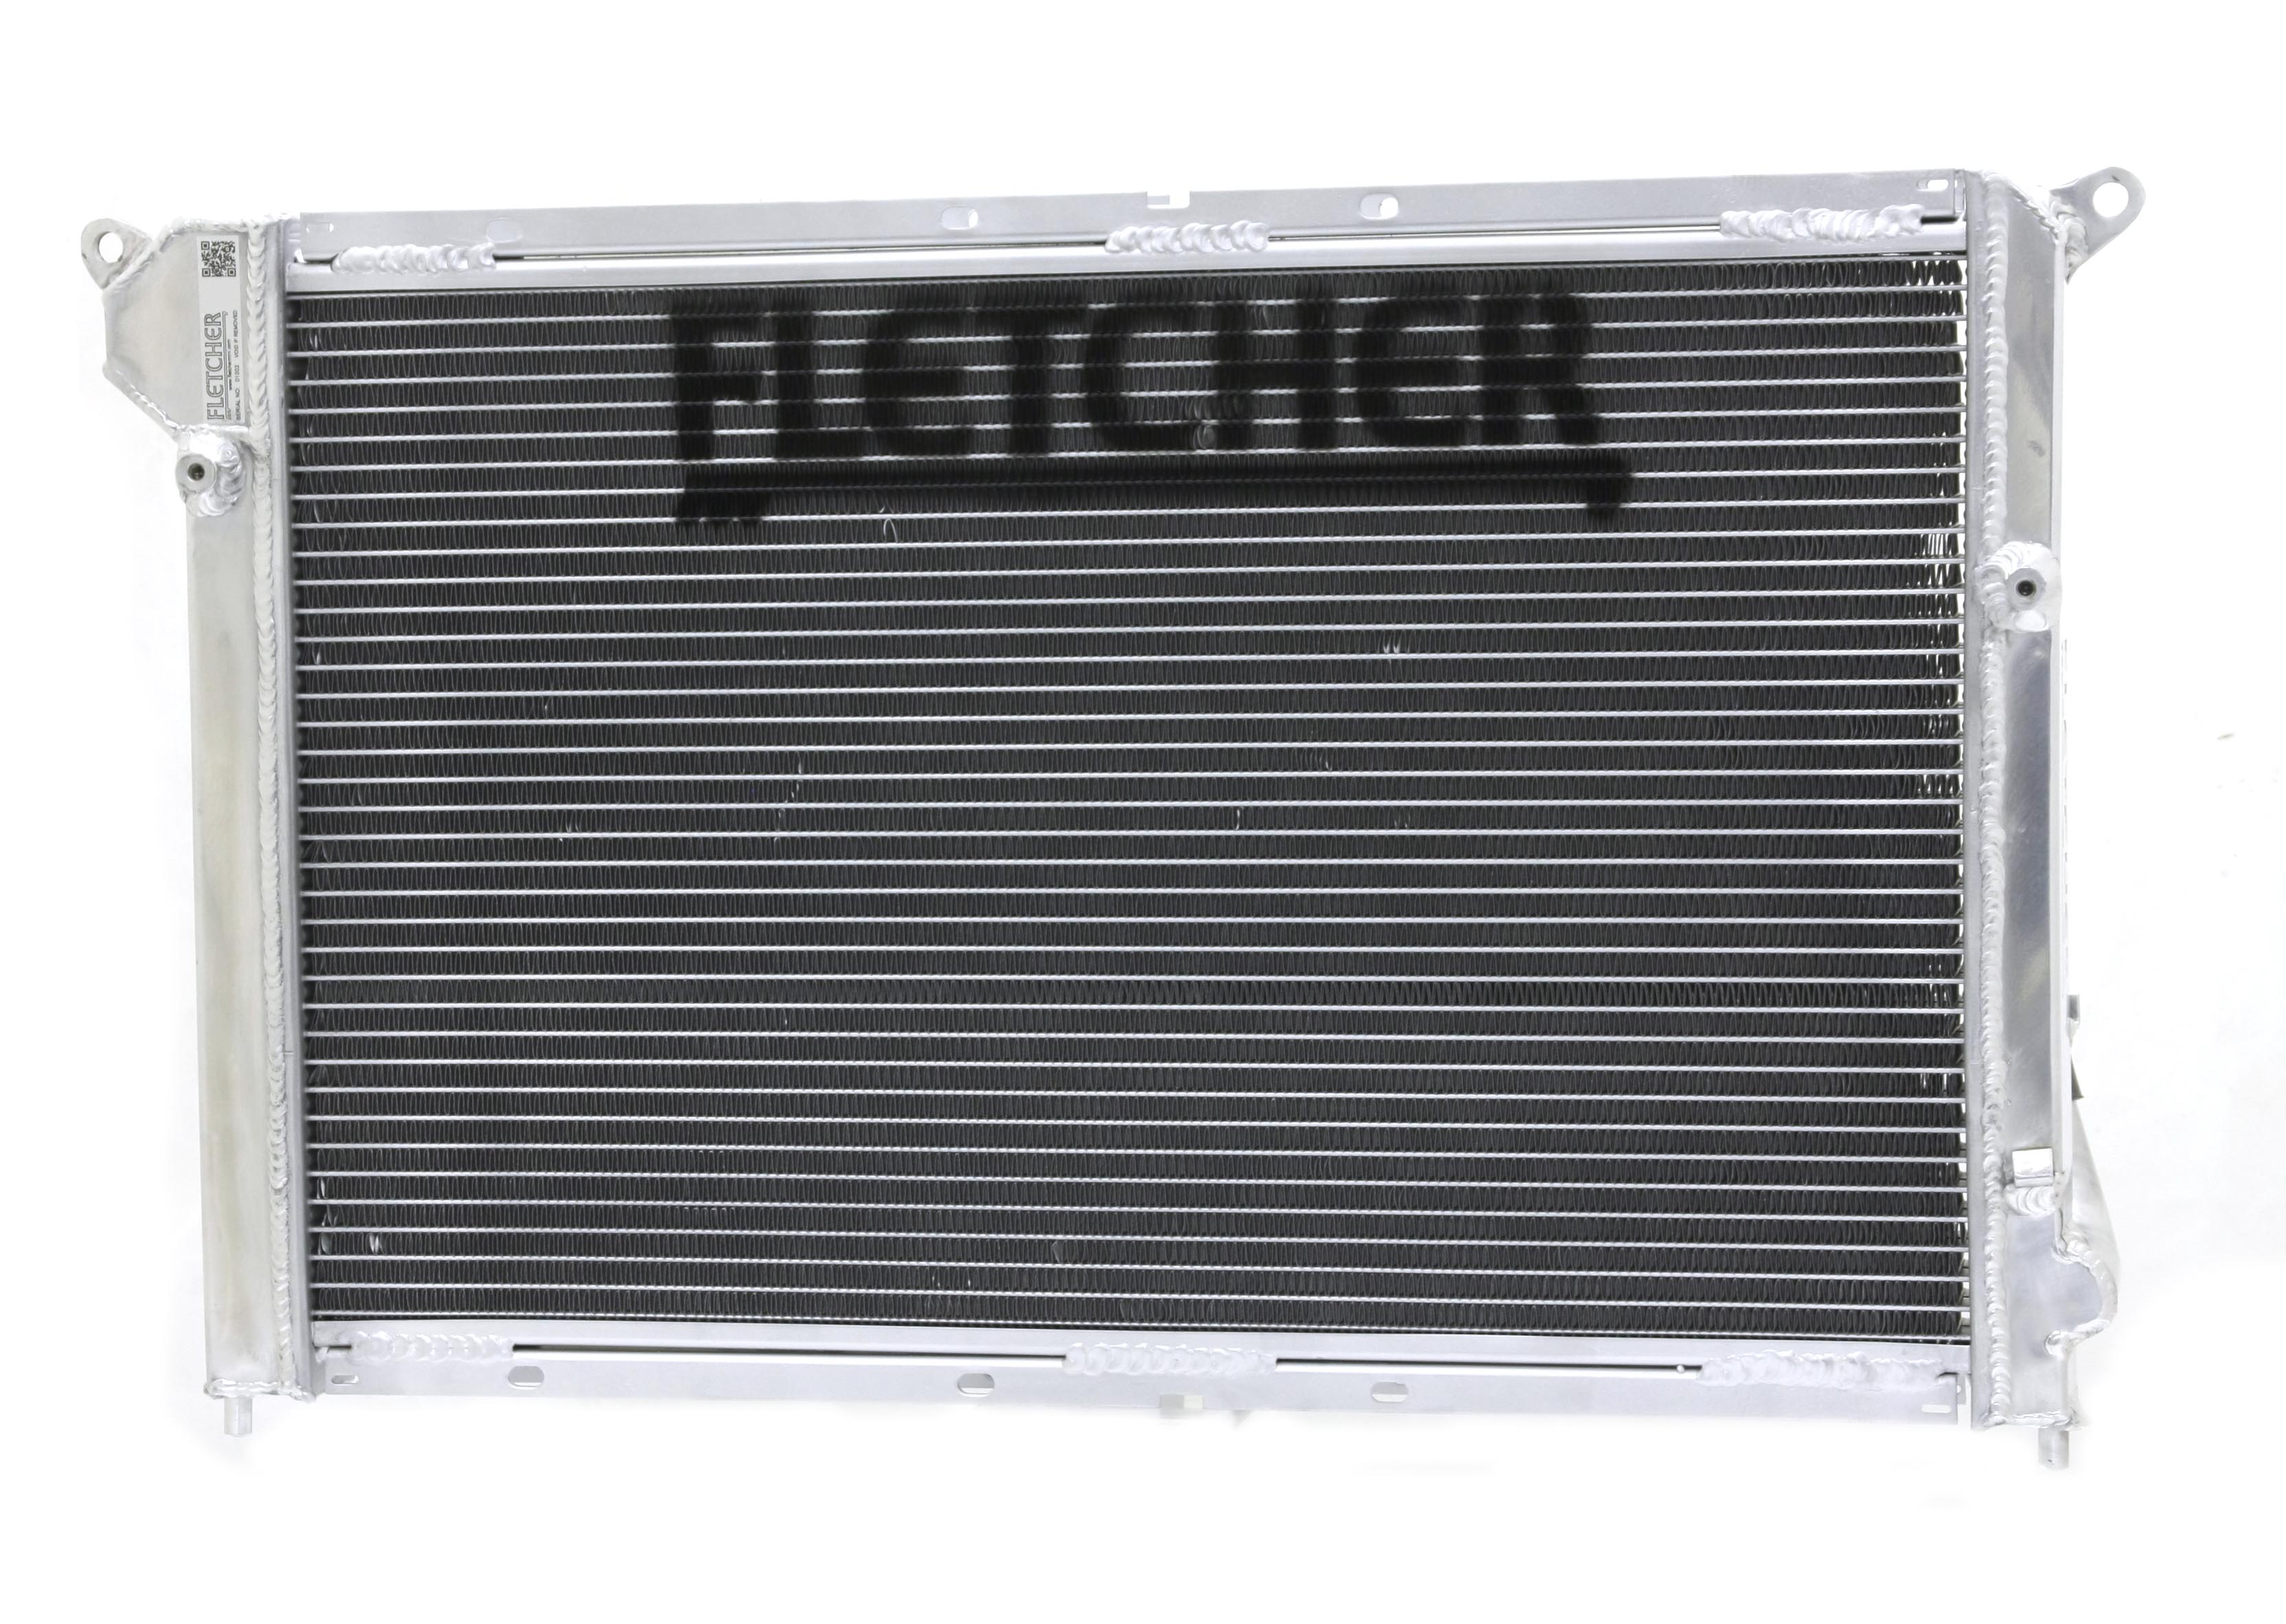 FM-R318B / MINI COOPER S R53 40mm ALLOY RADIATOR -  UPGRADED HIGH PRESSURE | FLETCHER MINI